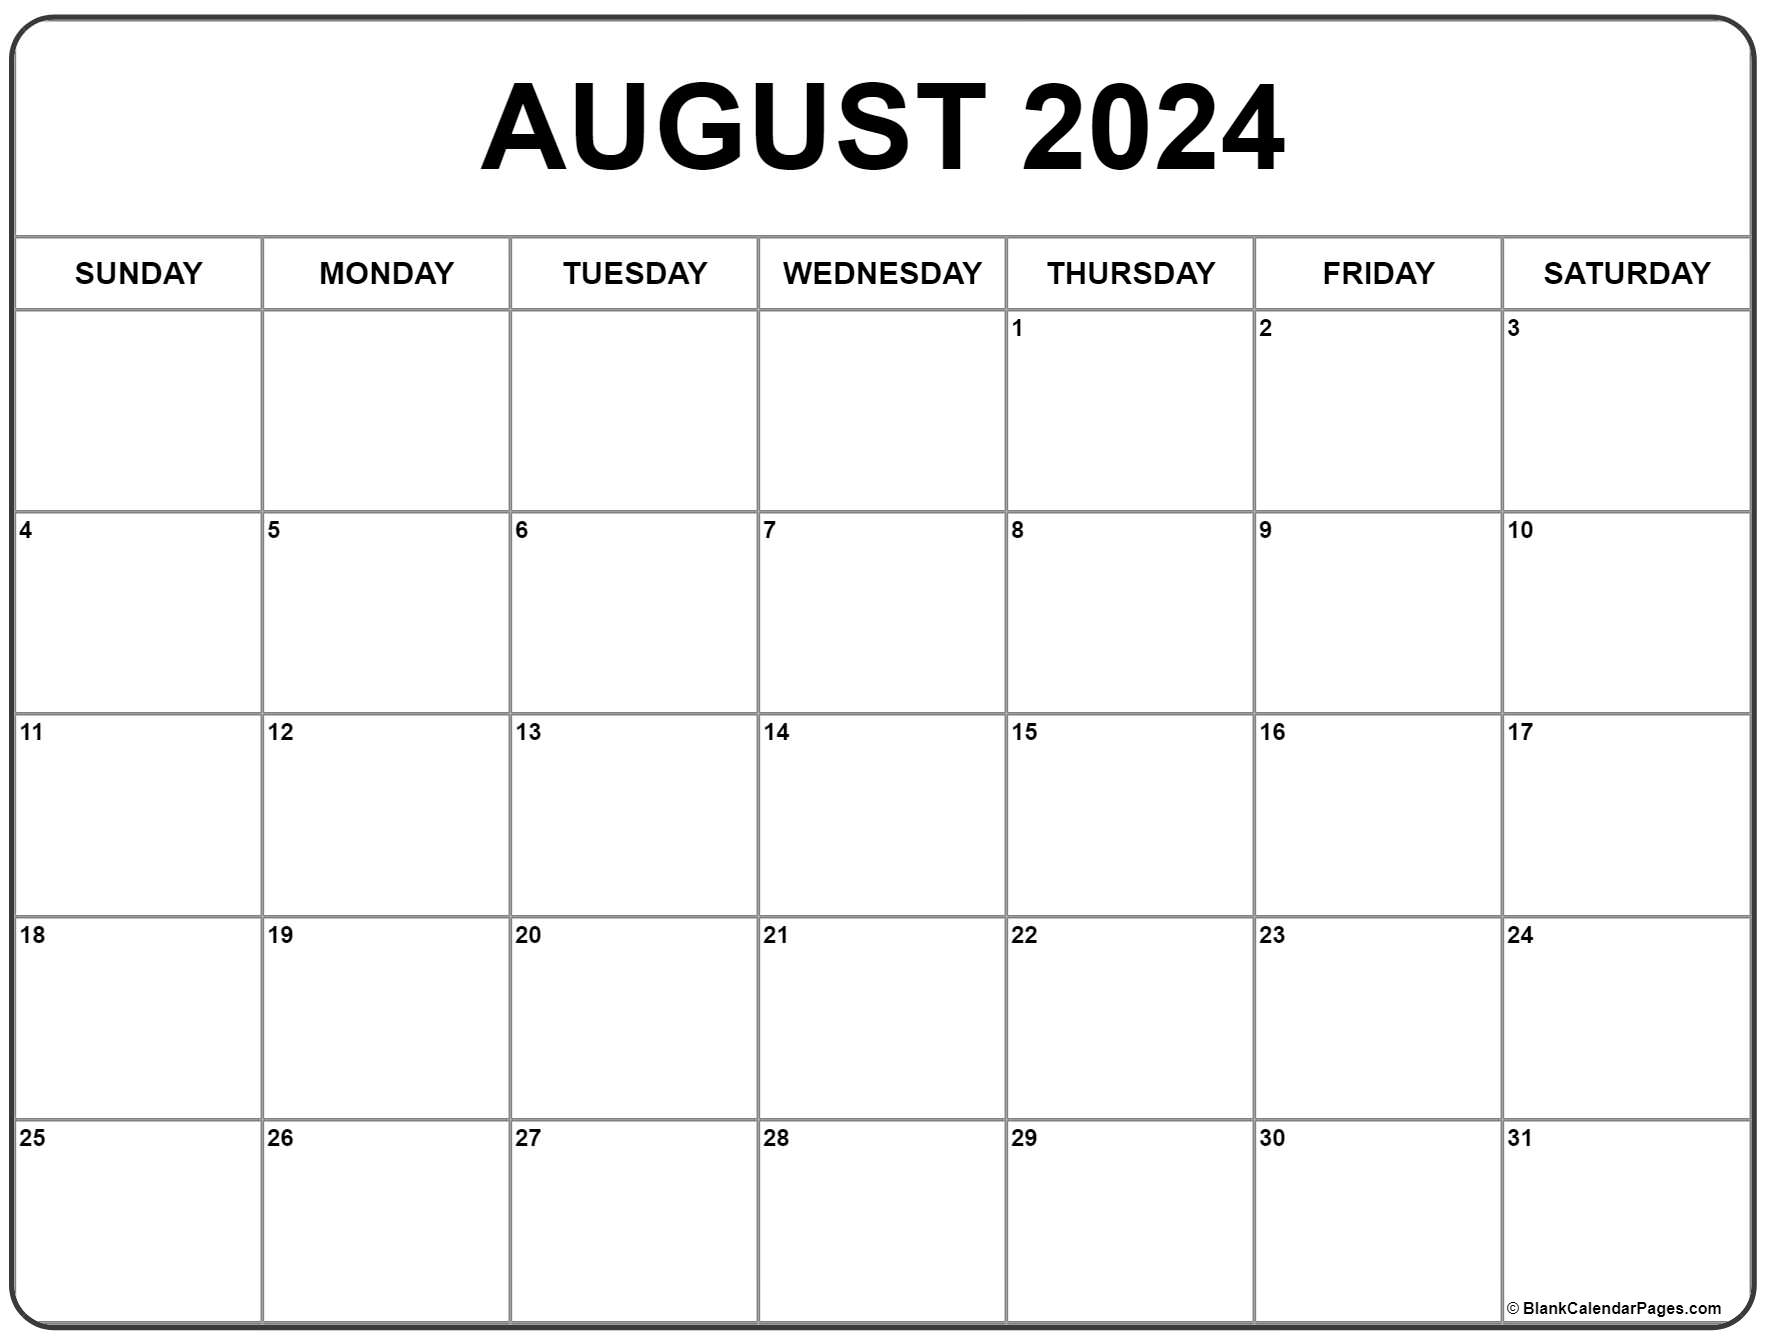 Print Calendar August 2022 August 2022 Calendar | Free Printable Calendar Templates